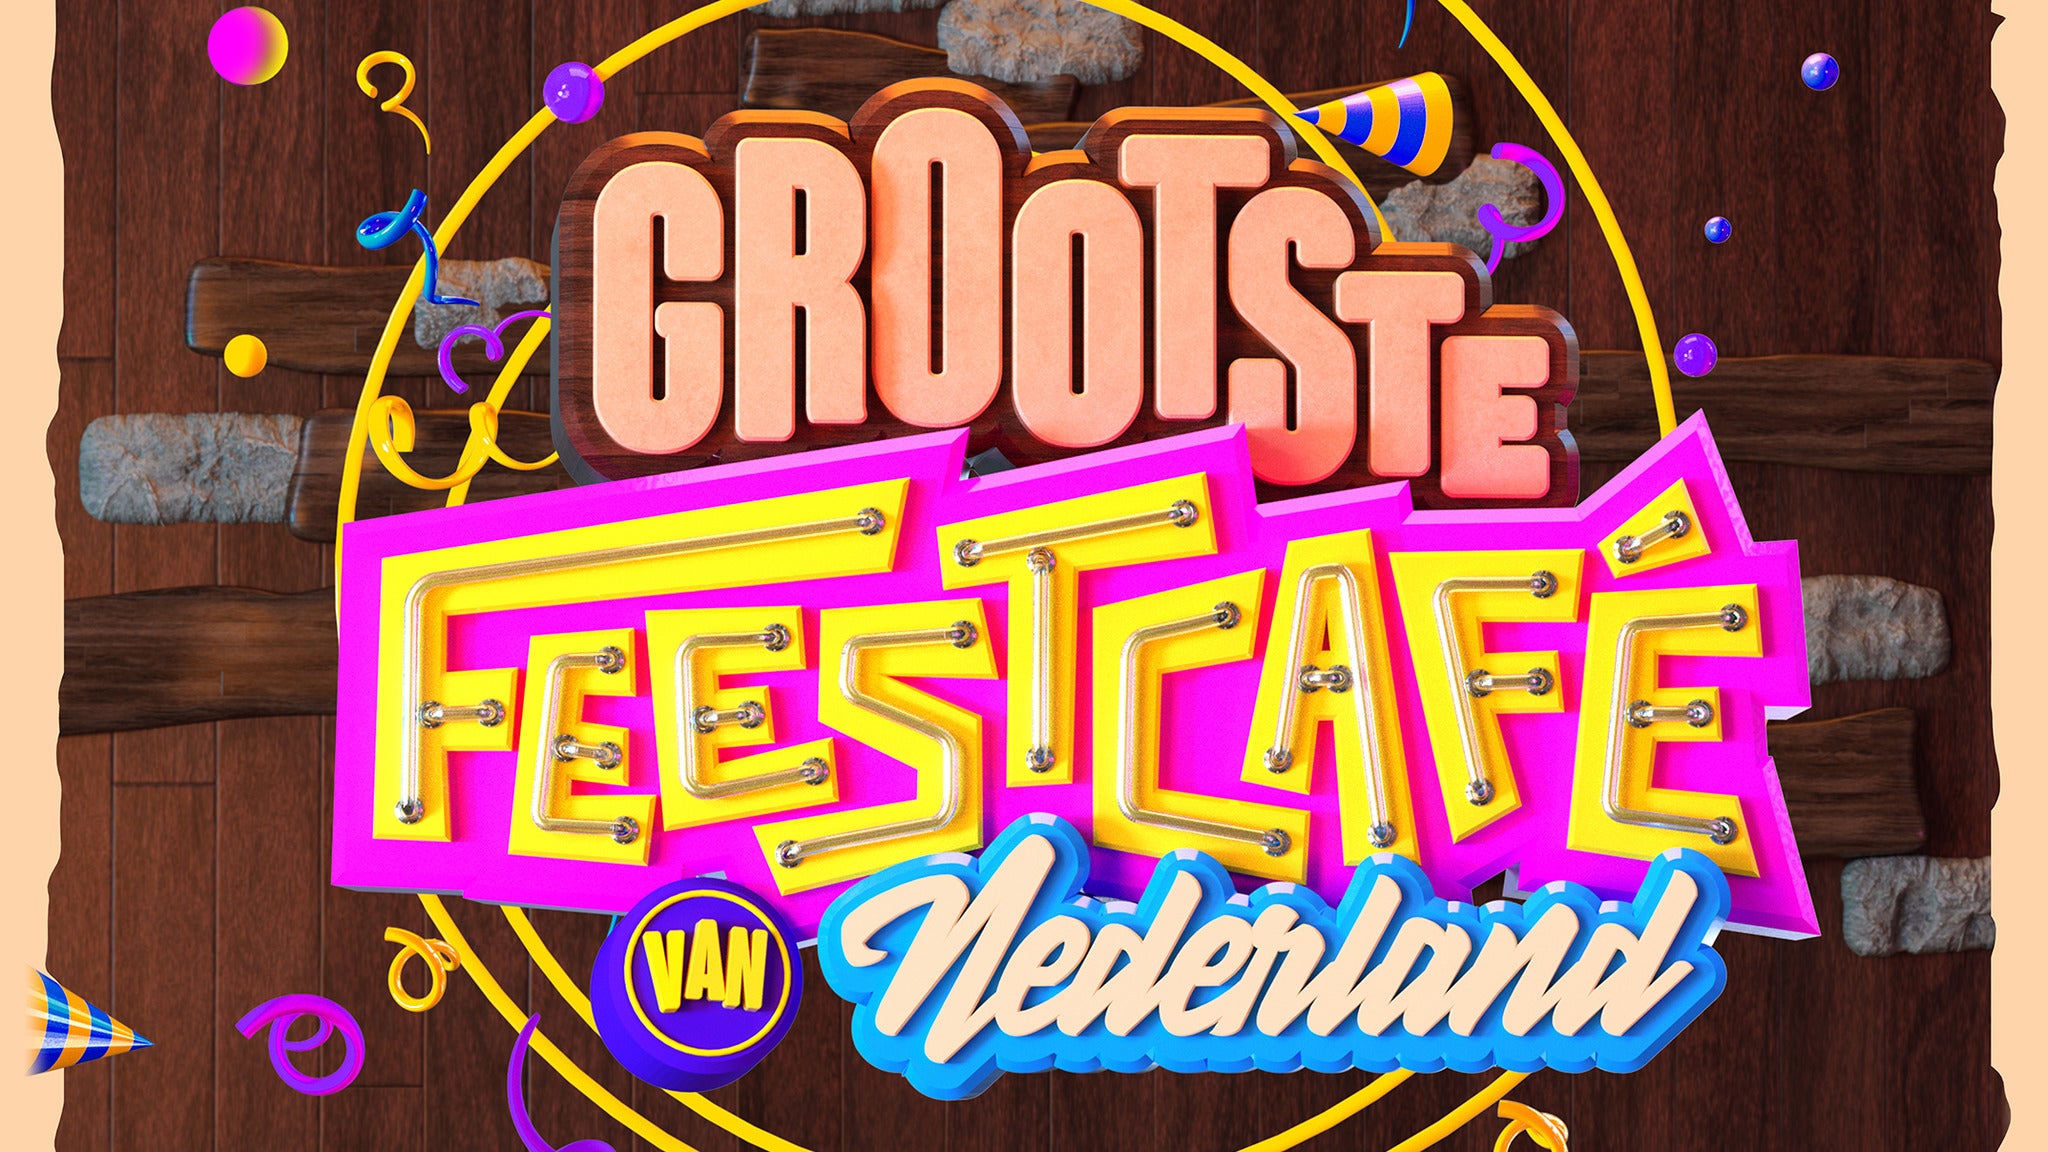 Grootste Feestcafé van Nederland  Ticket + Afterparty (staan)